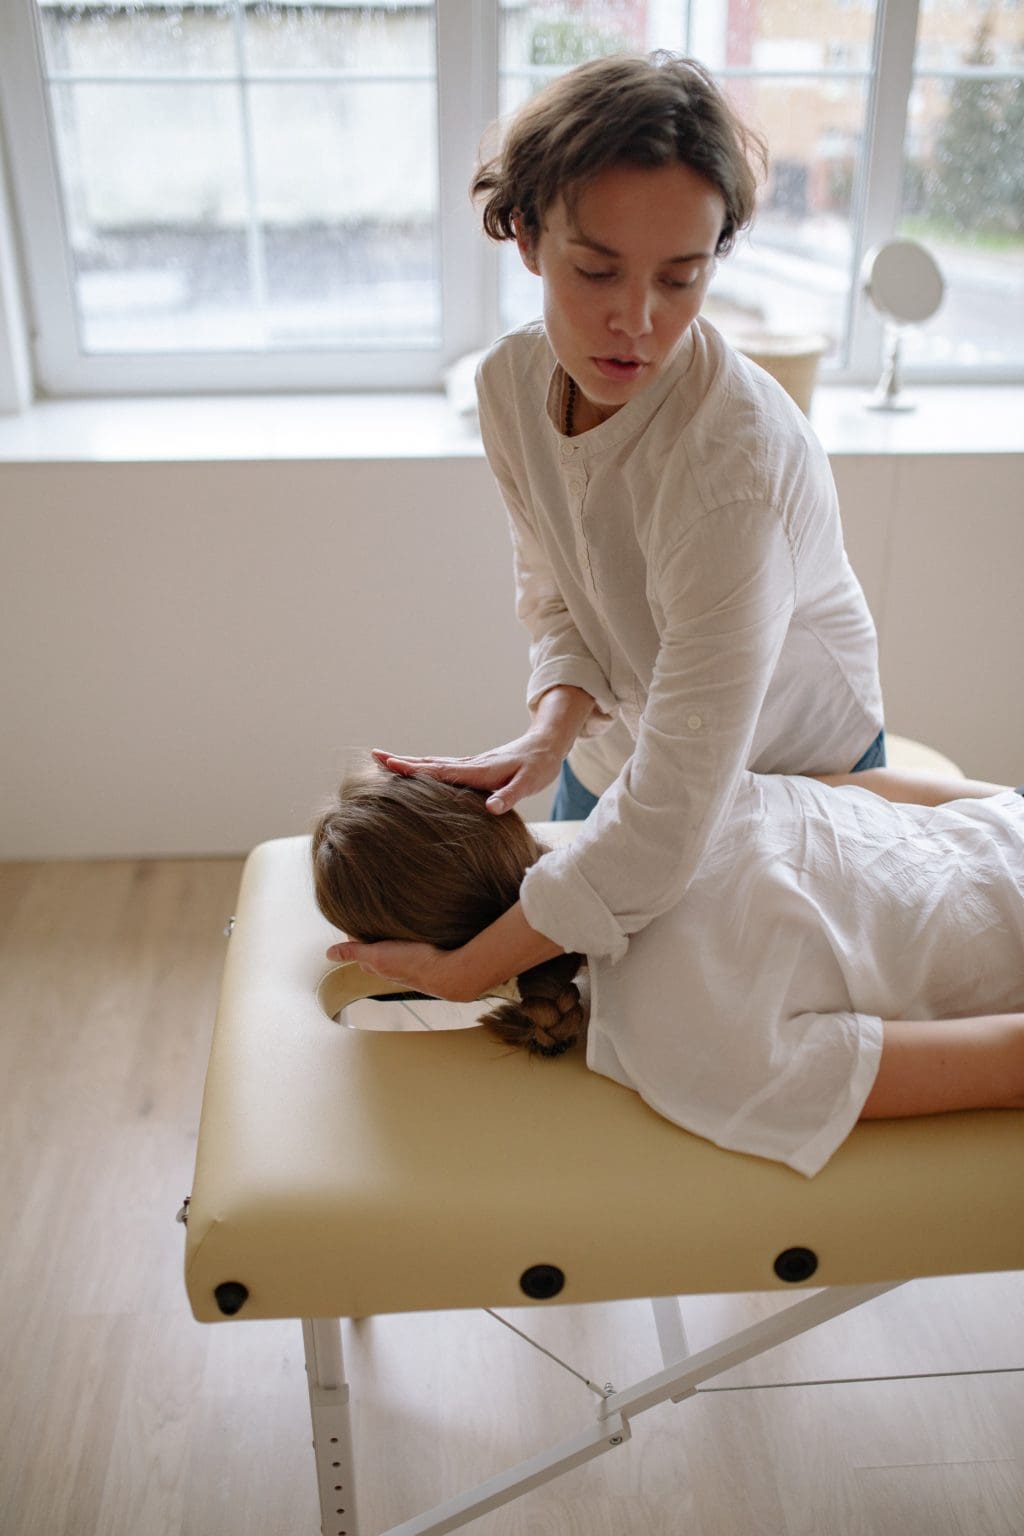 Wandsworth Beauty Salon Massage Treatments, Massage in Wandsworth, Massage in London, Massage Treatments, iLuvo Beauty.